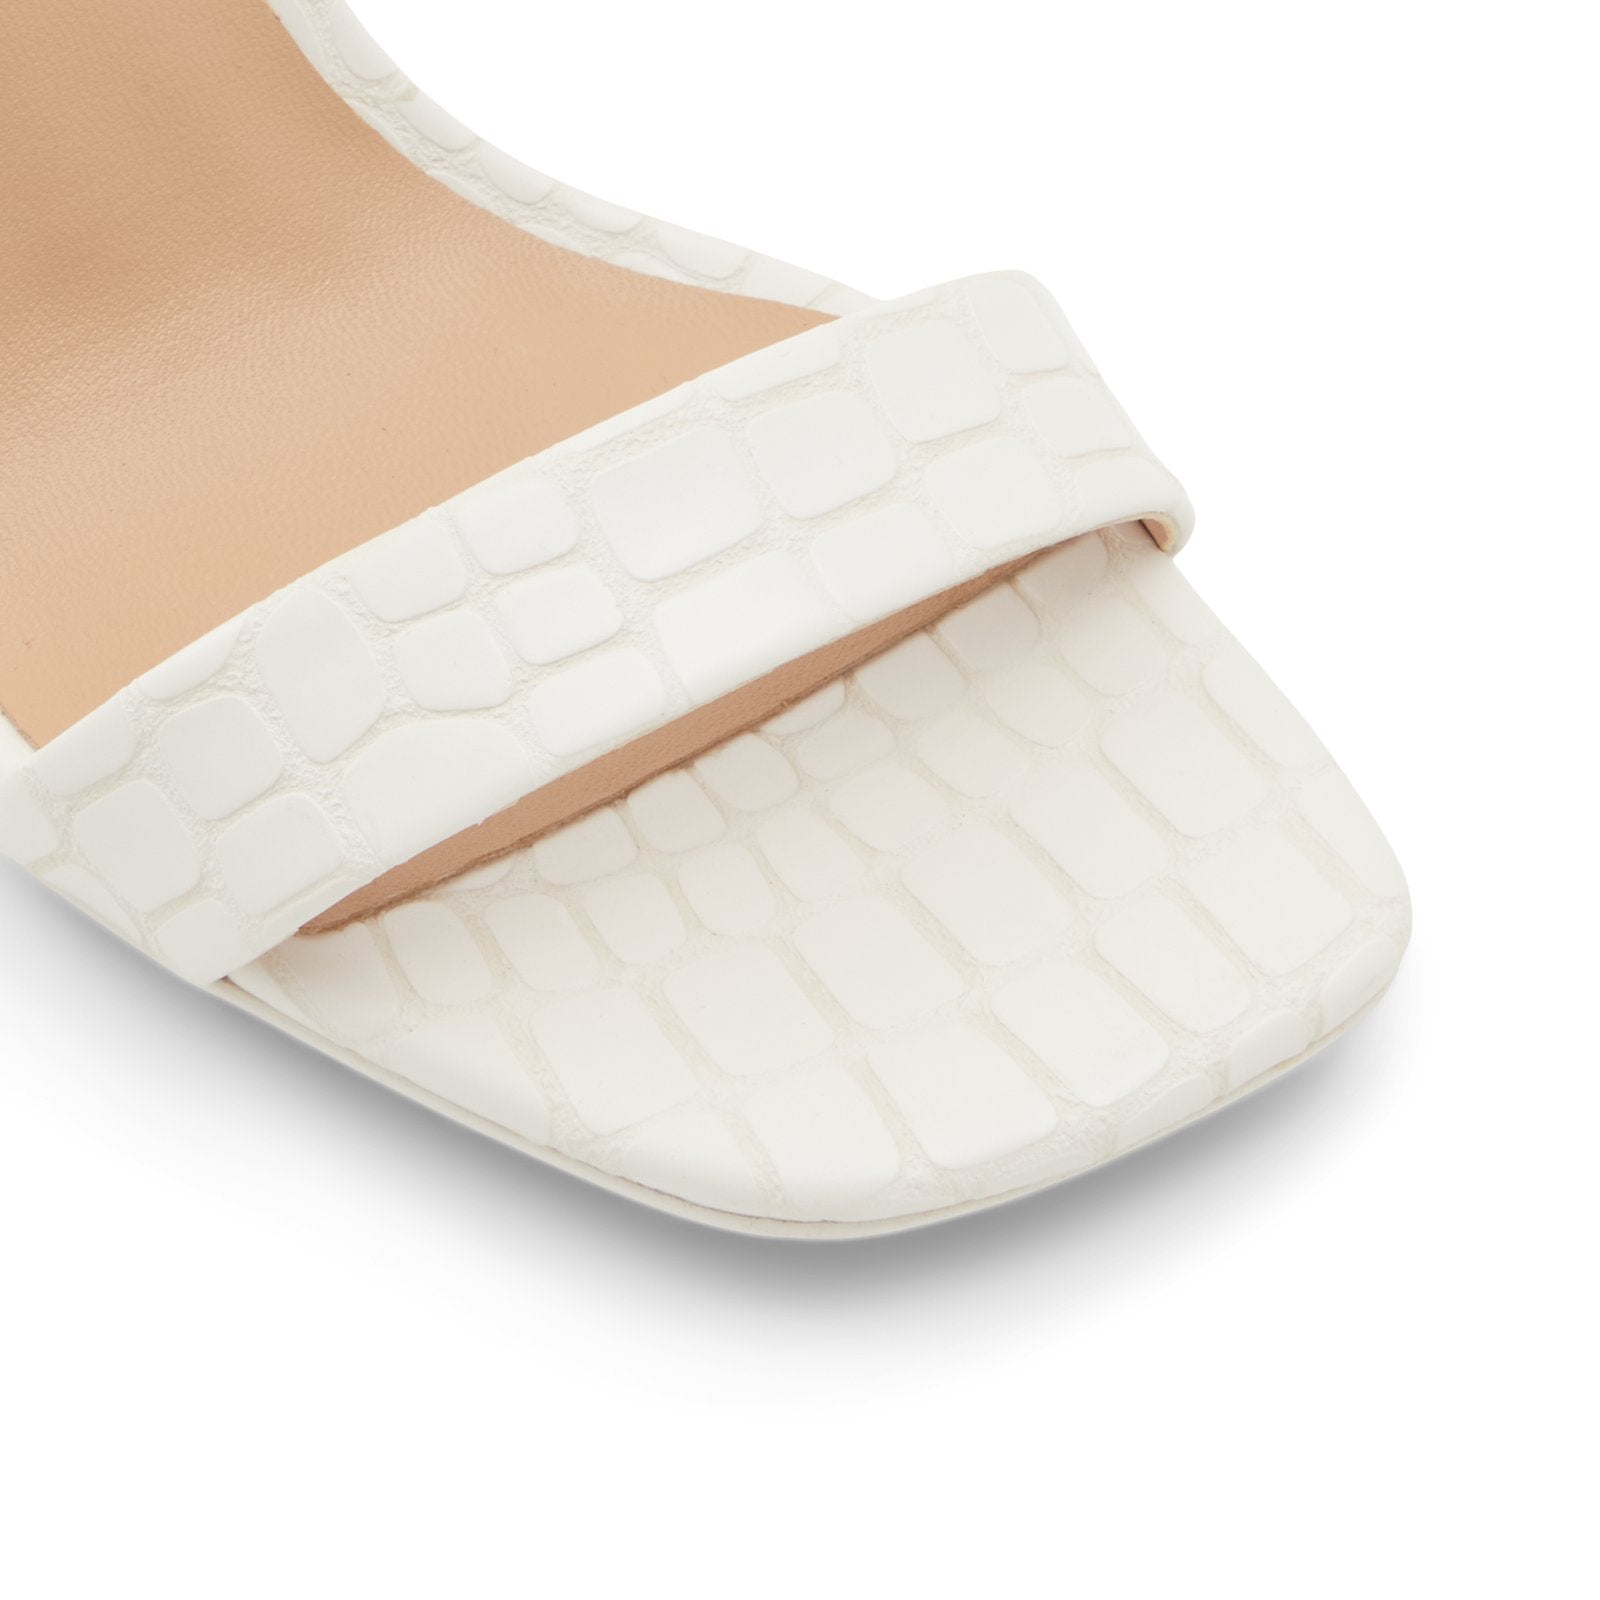 Elenna / Heeled Sandals Women Shoes - Ice - CALL IT SPRING KSA